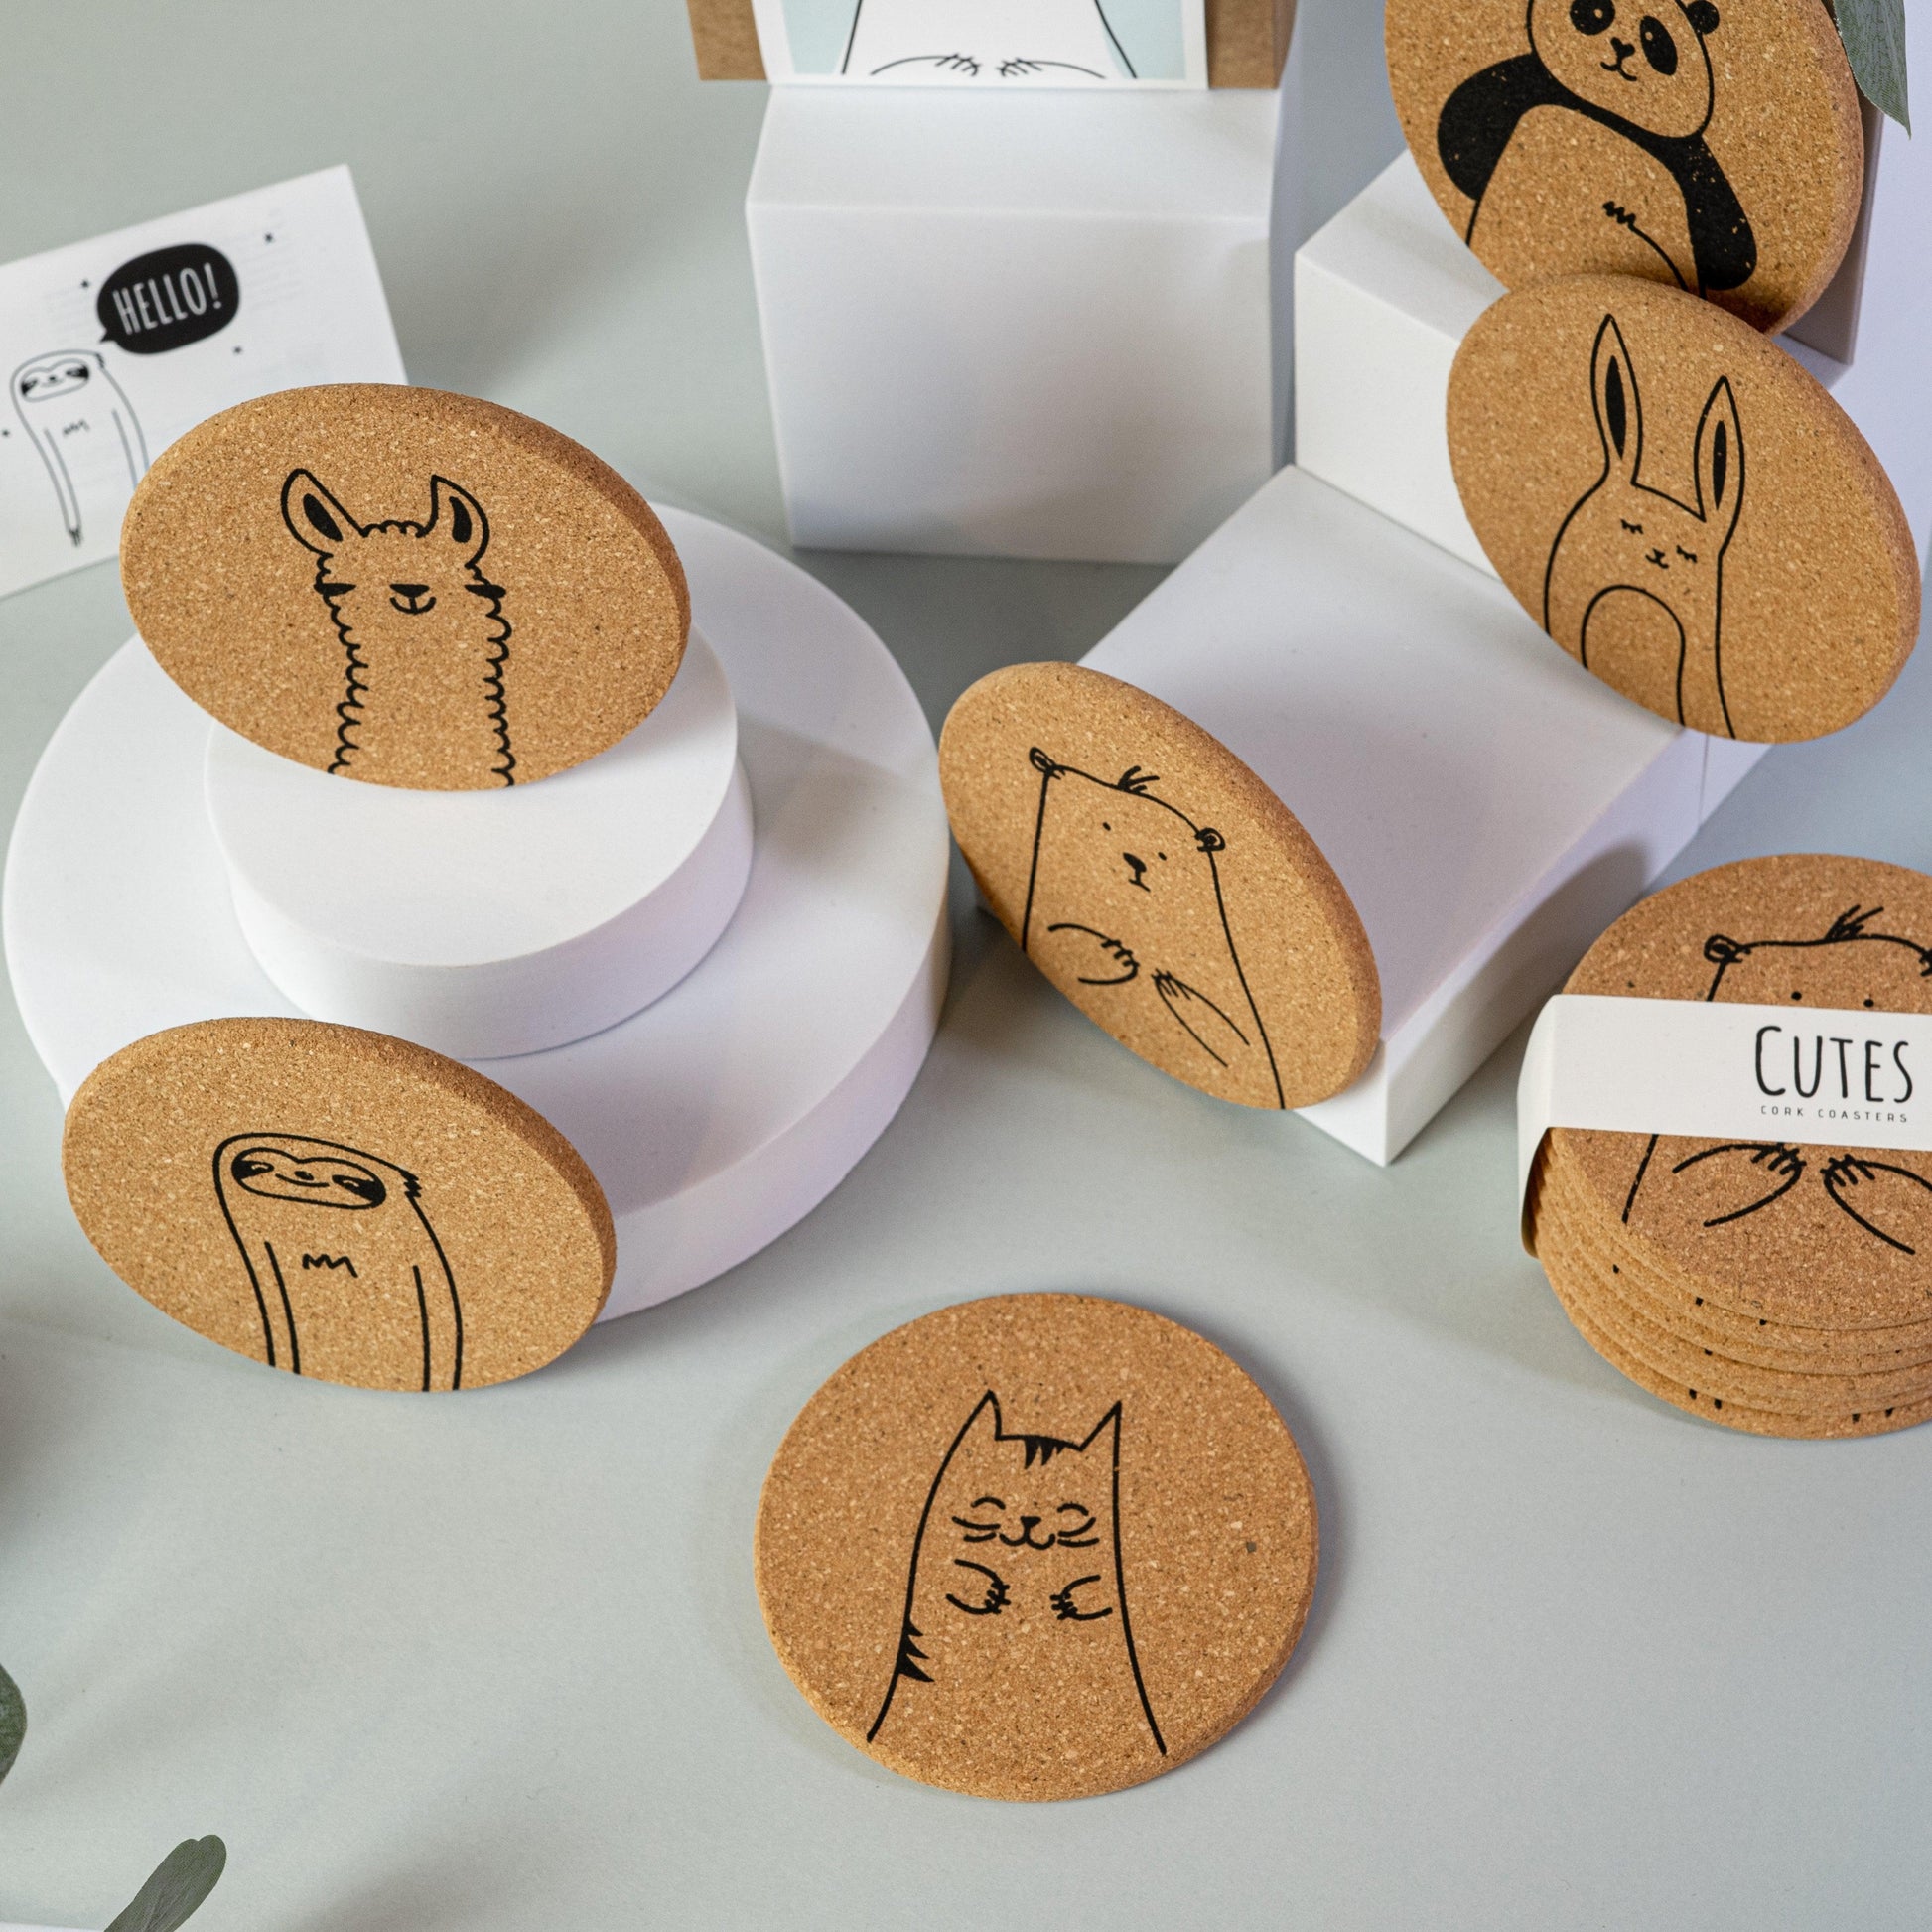 Cutes - Cork coasters, set of 6, cute animals - PepMelon